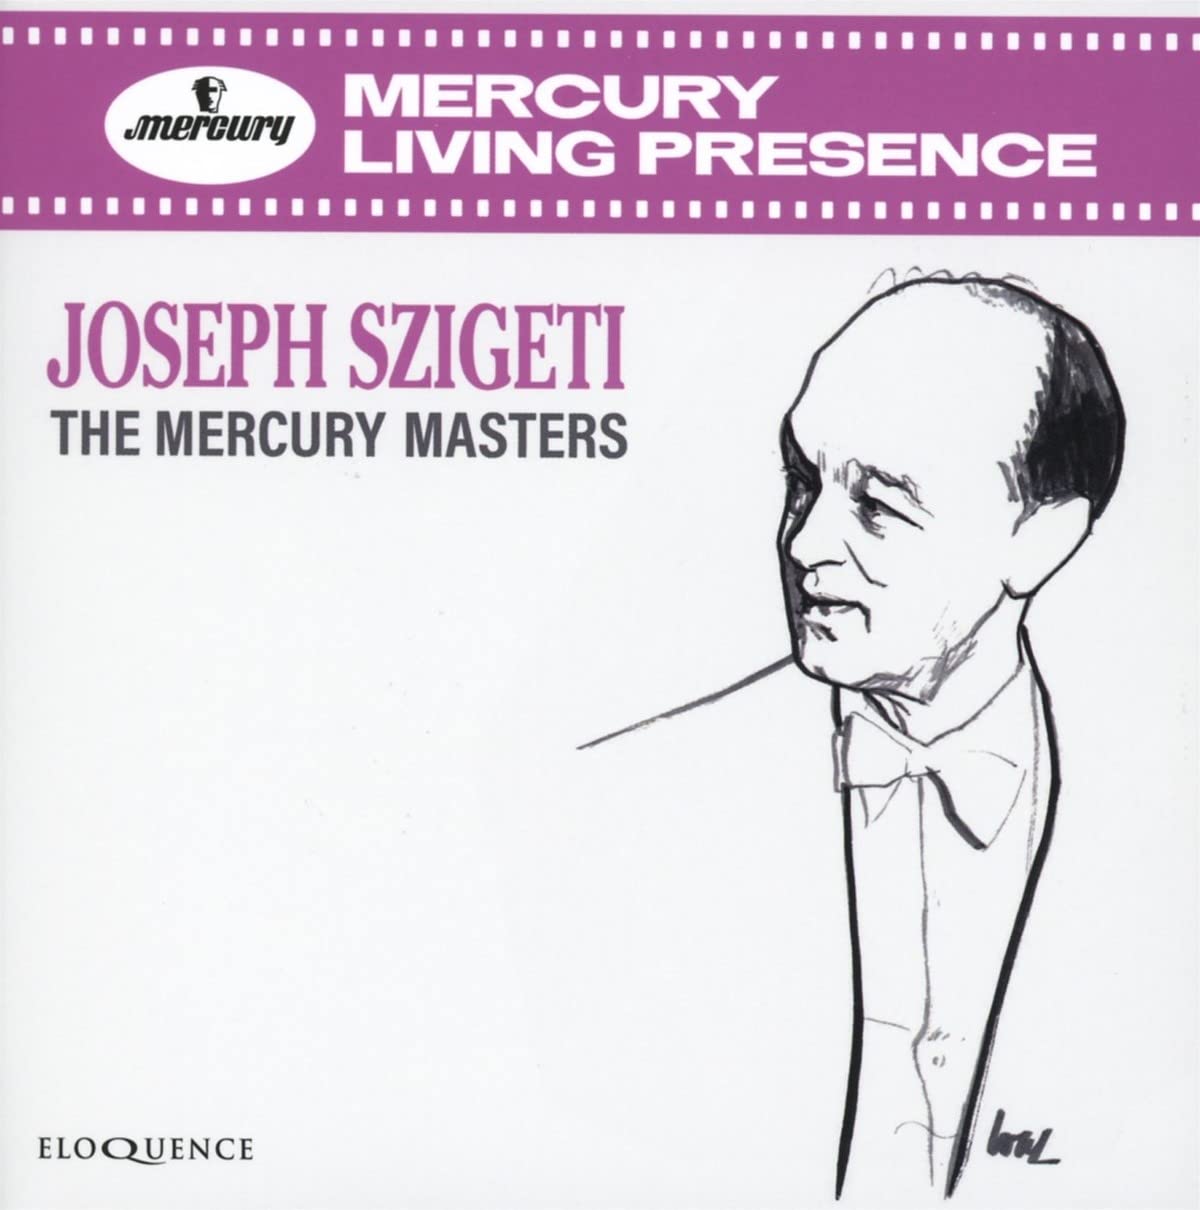 Joseph Szigeti: the Mercury Masters